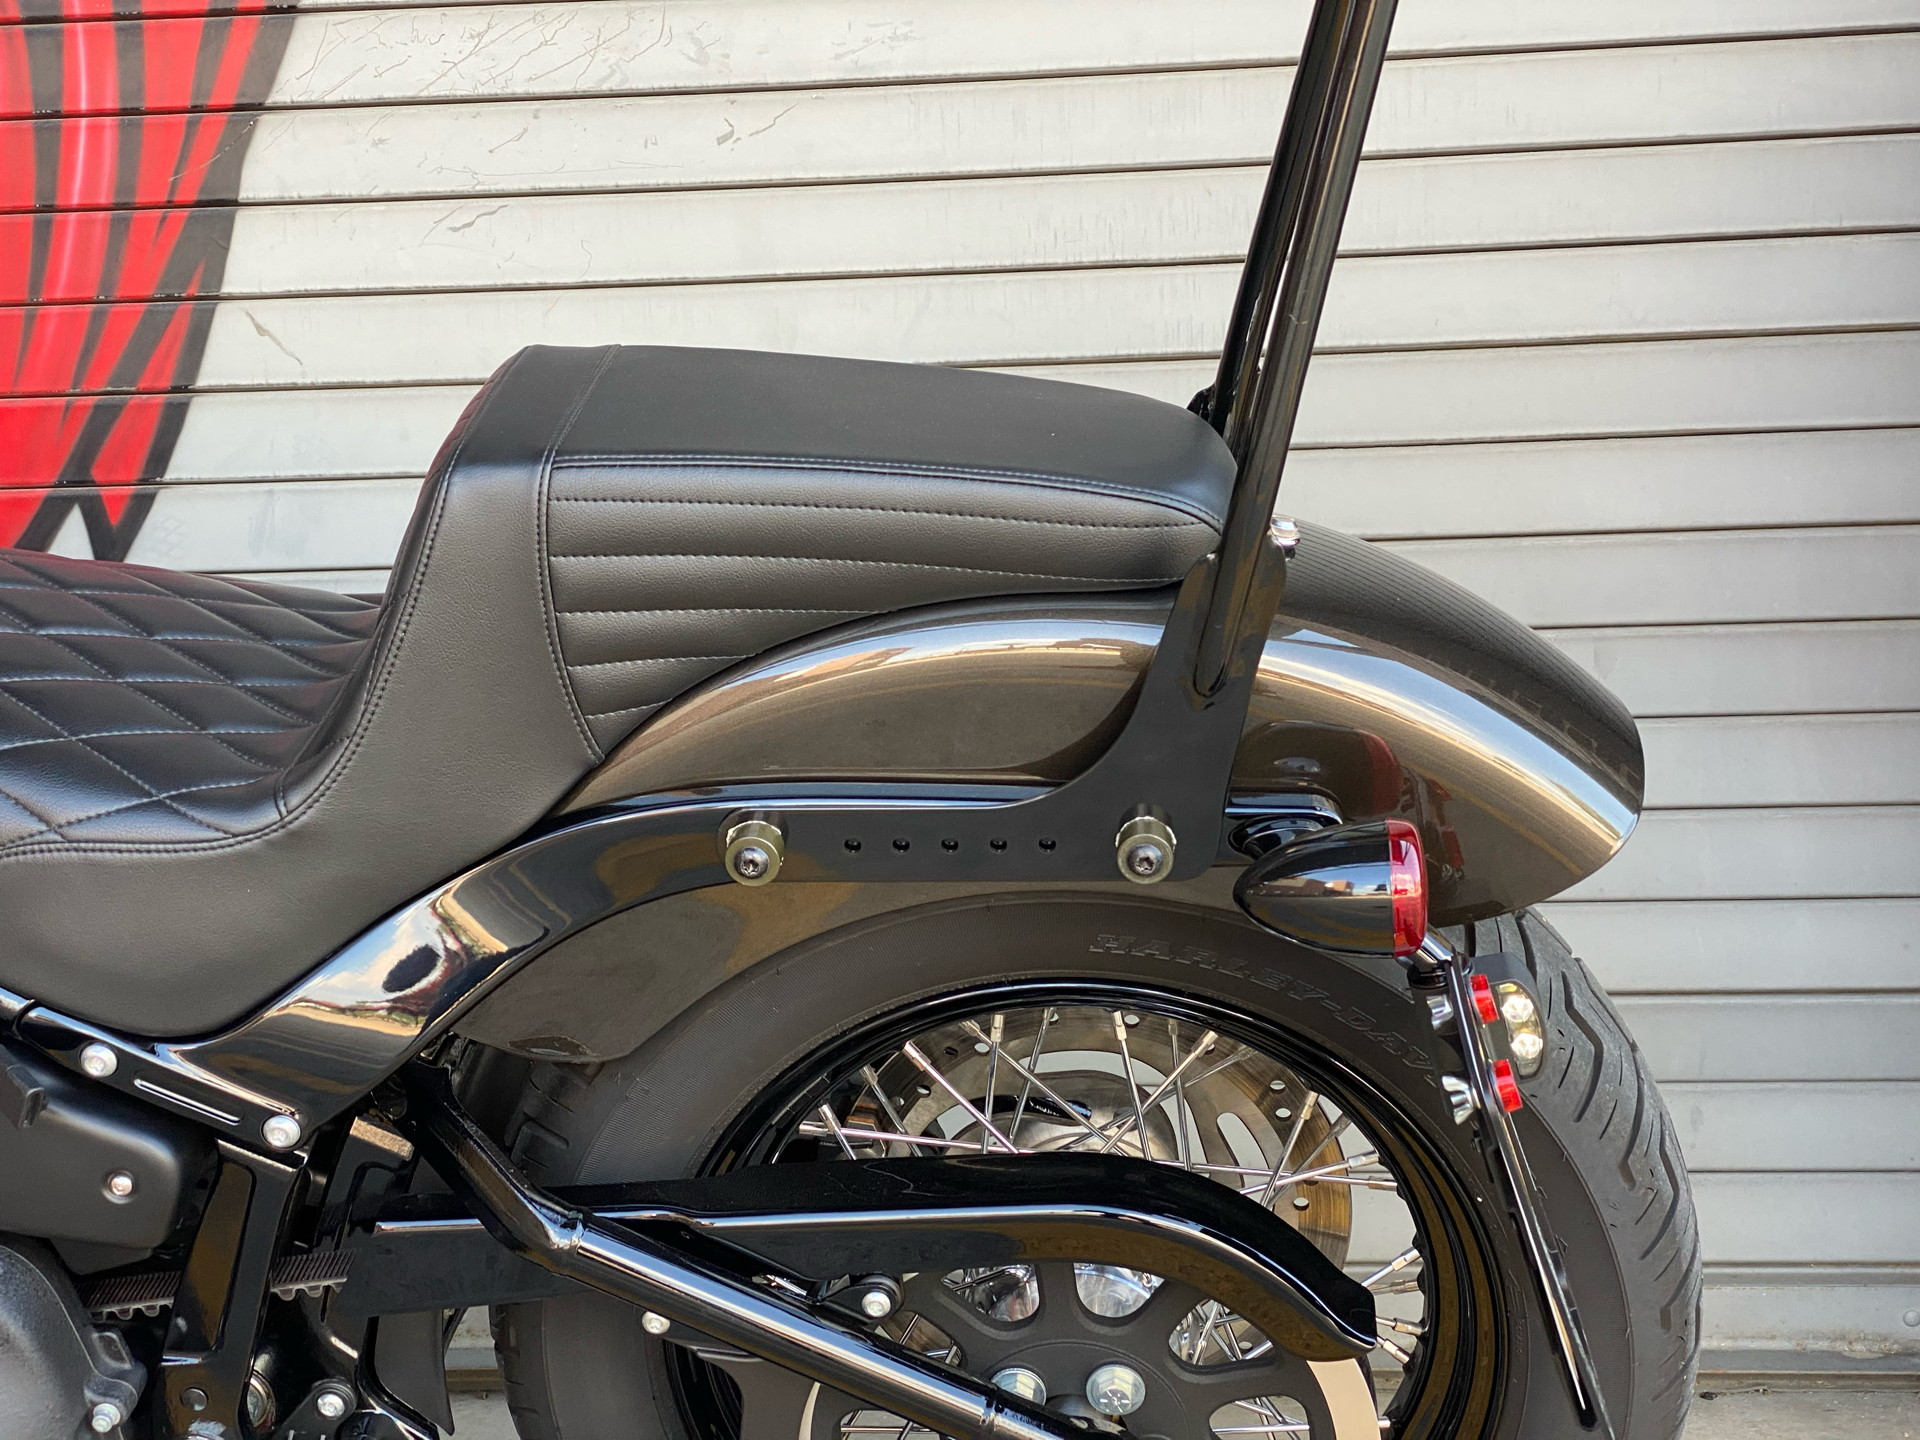 2020 Harley-Davidson Street Bob® in Carrollton, Texas - Photo 20